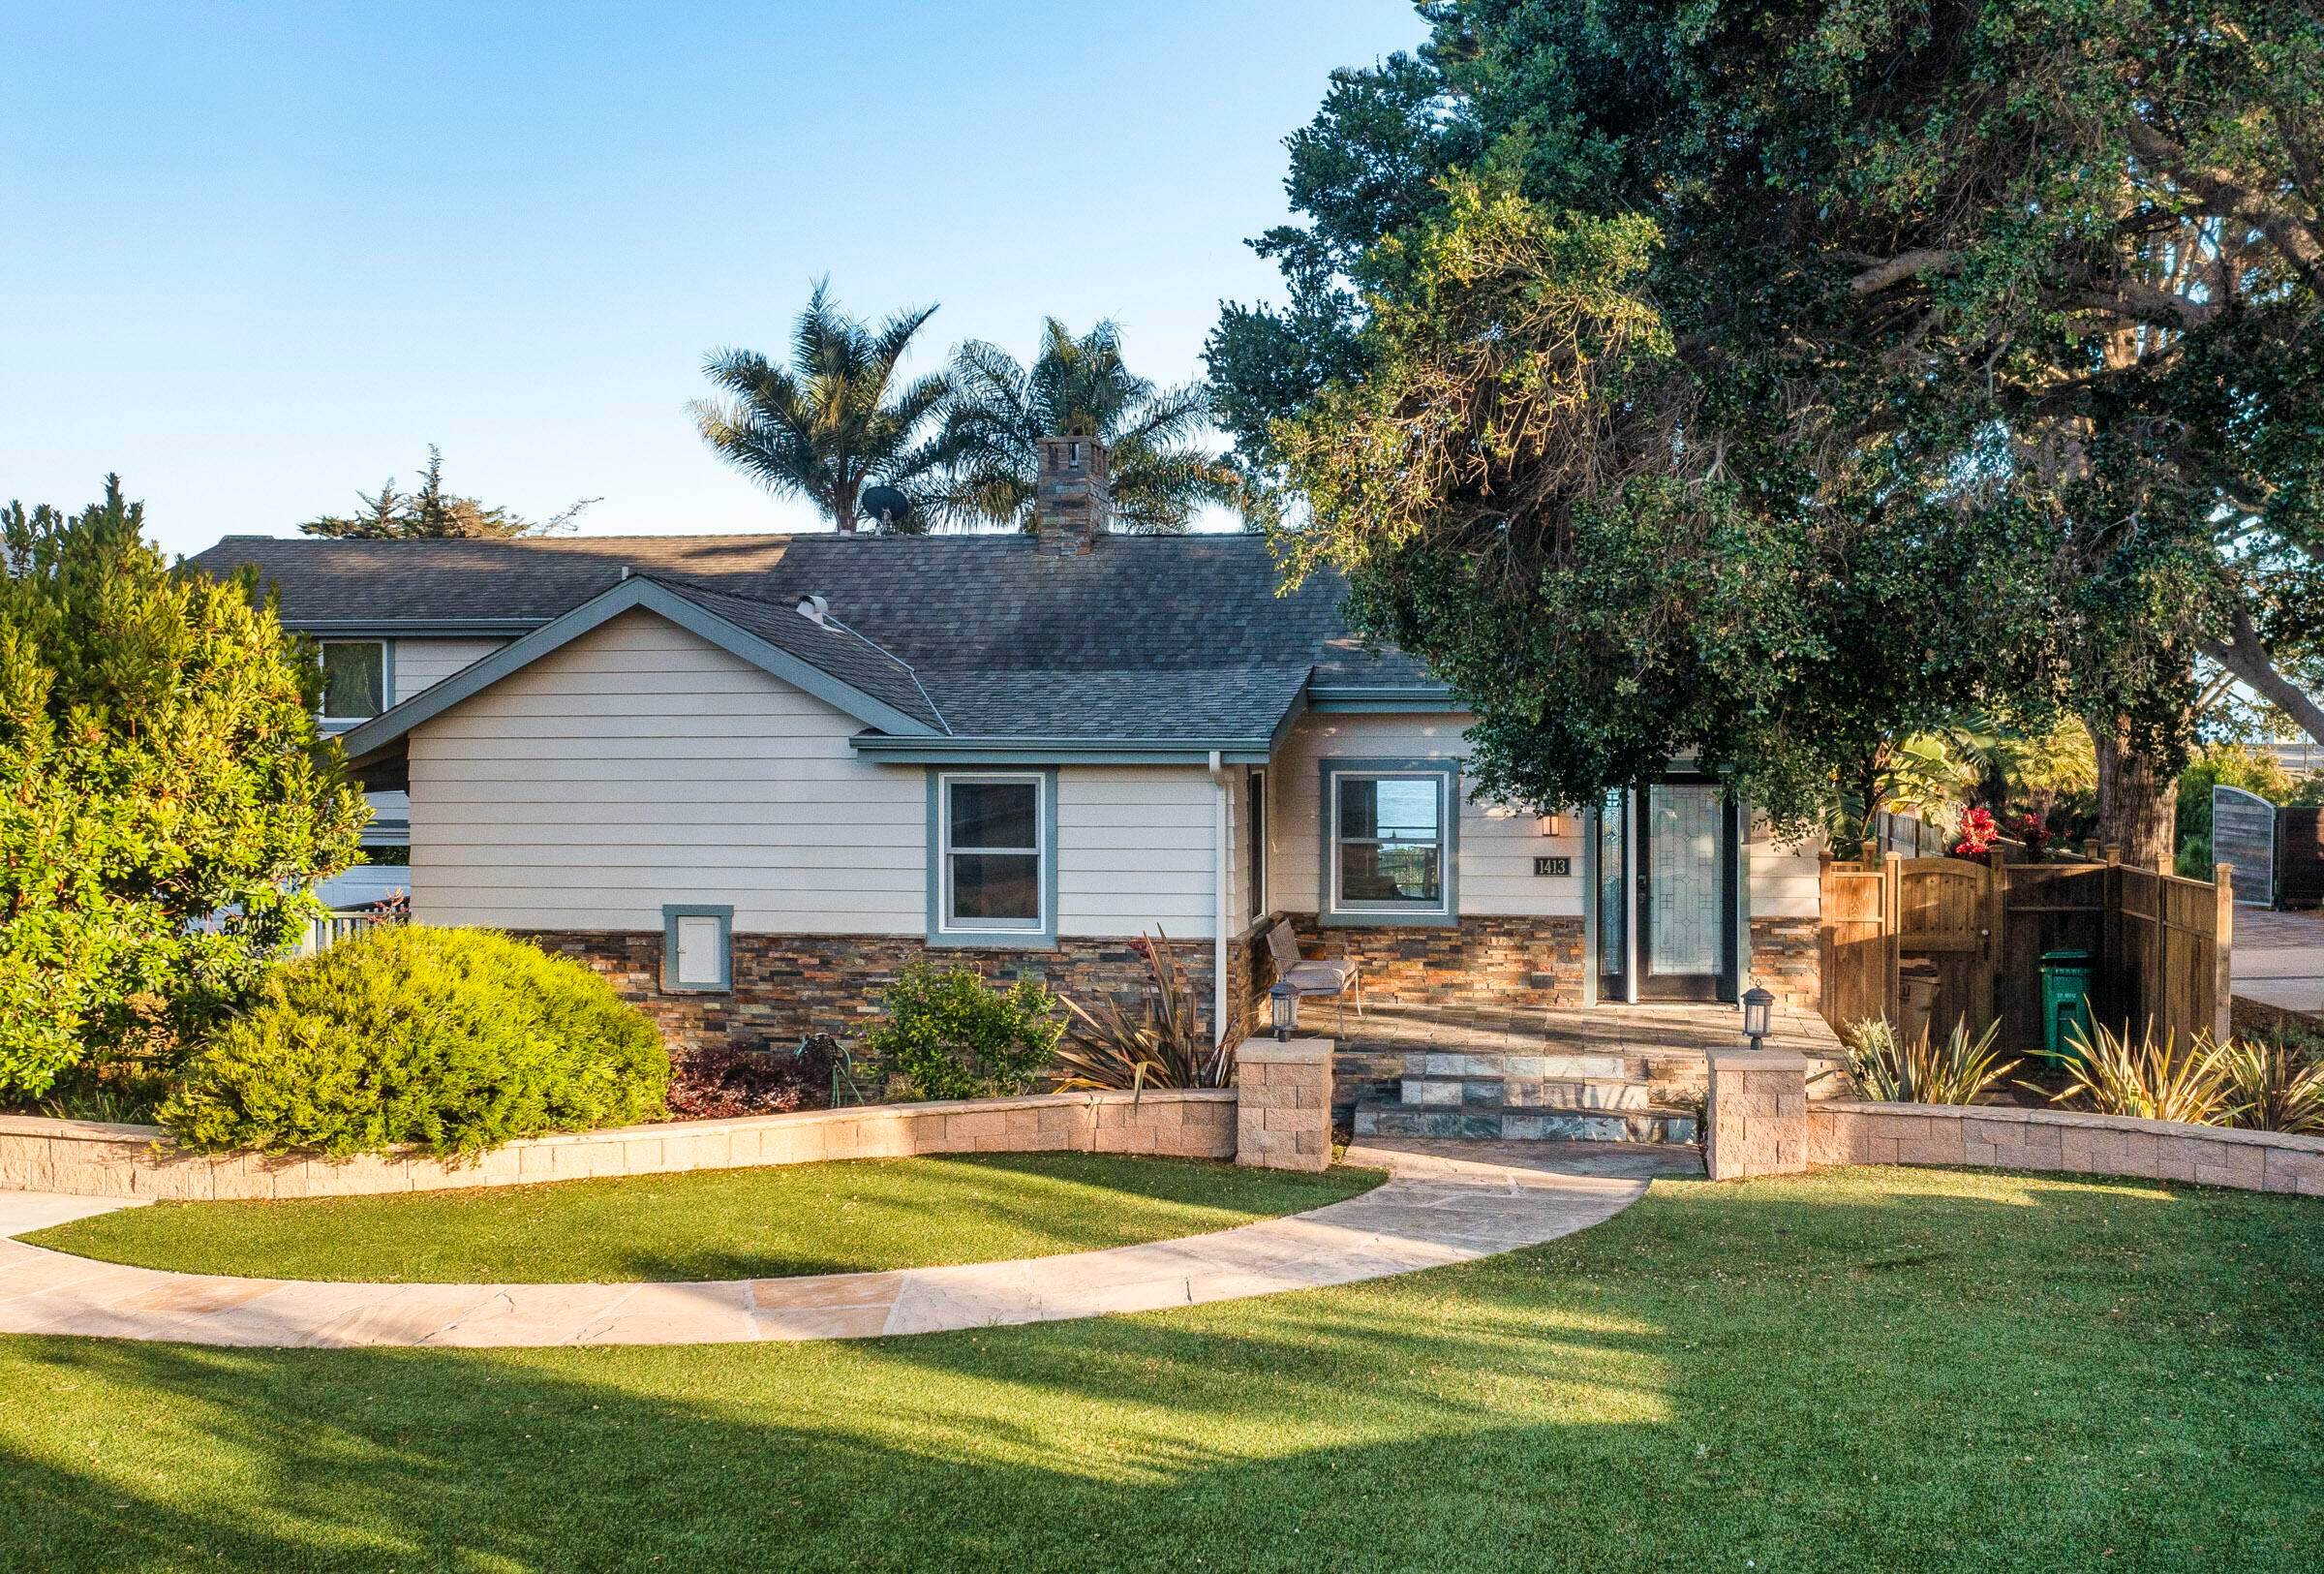 29. Estate for Sale at 1409 -1413 Shoreline Drive Santa Barbara, California 93109 United States